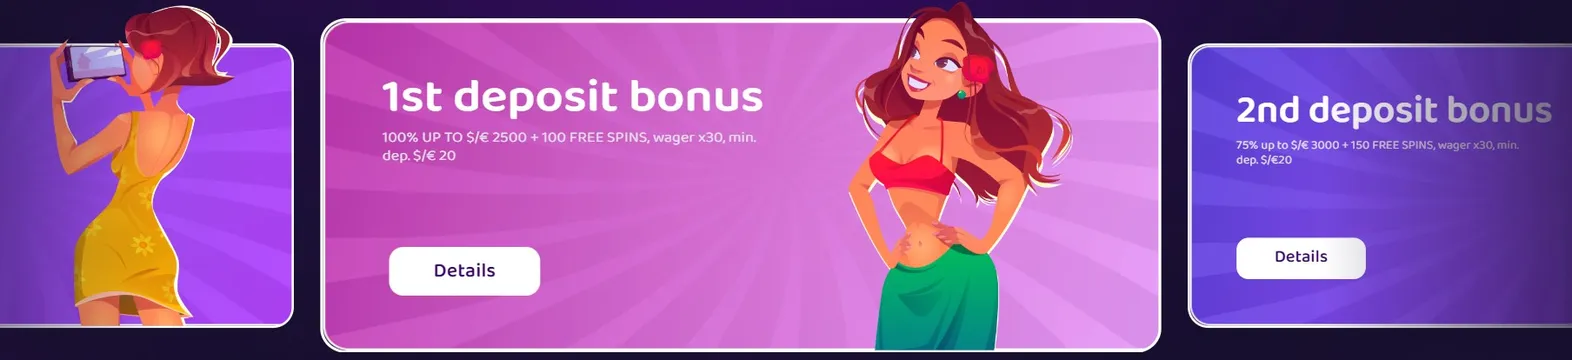 dream spin casino welcome bonus